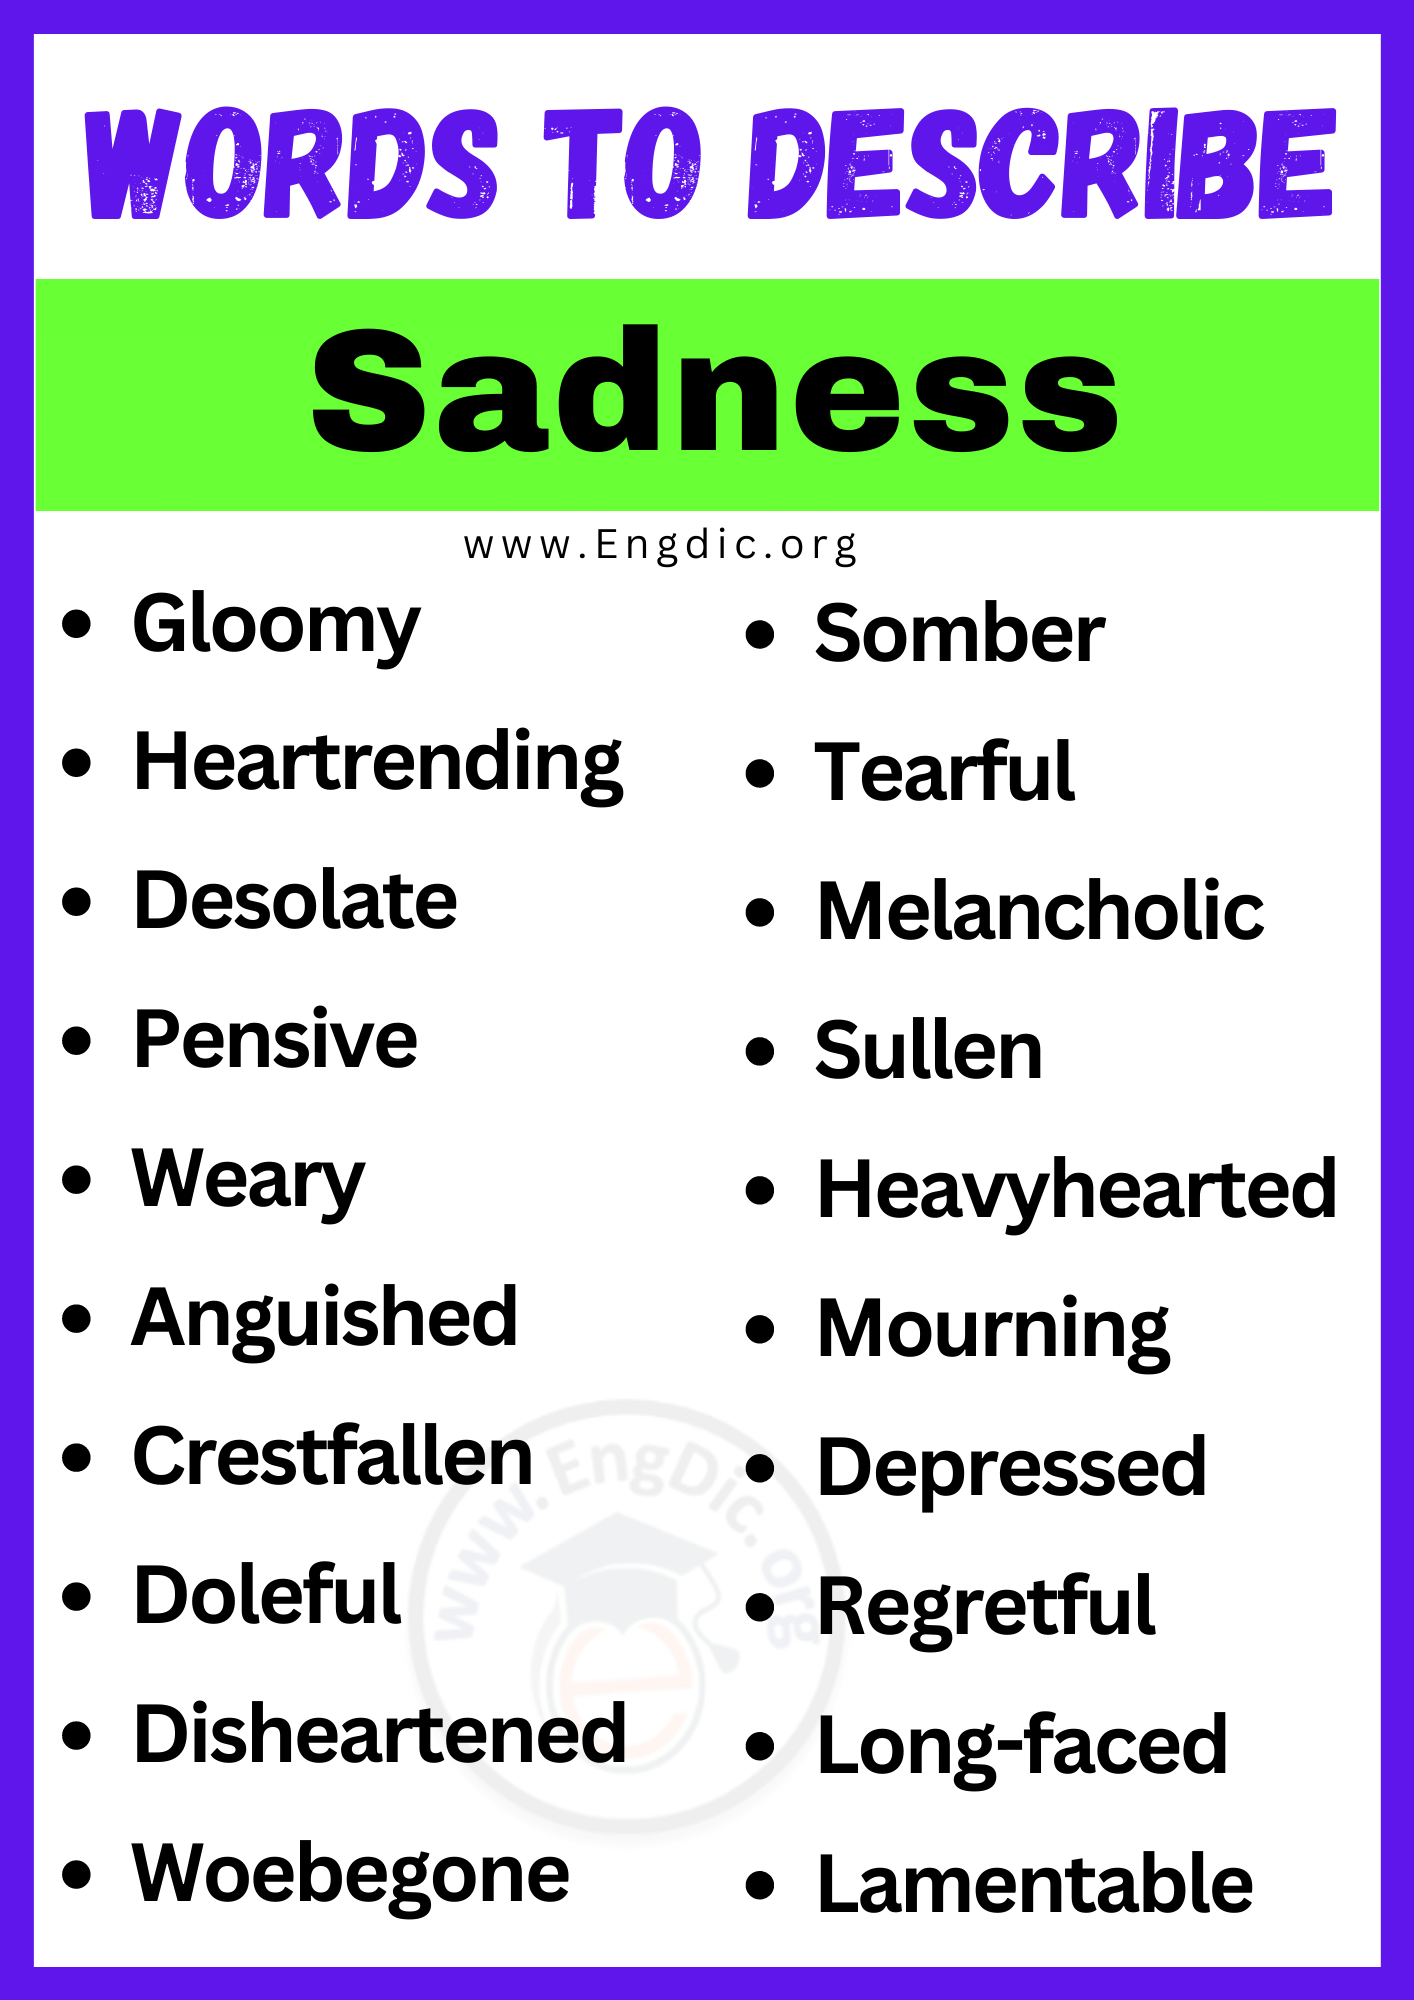 Words to Describe Sadness